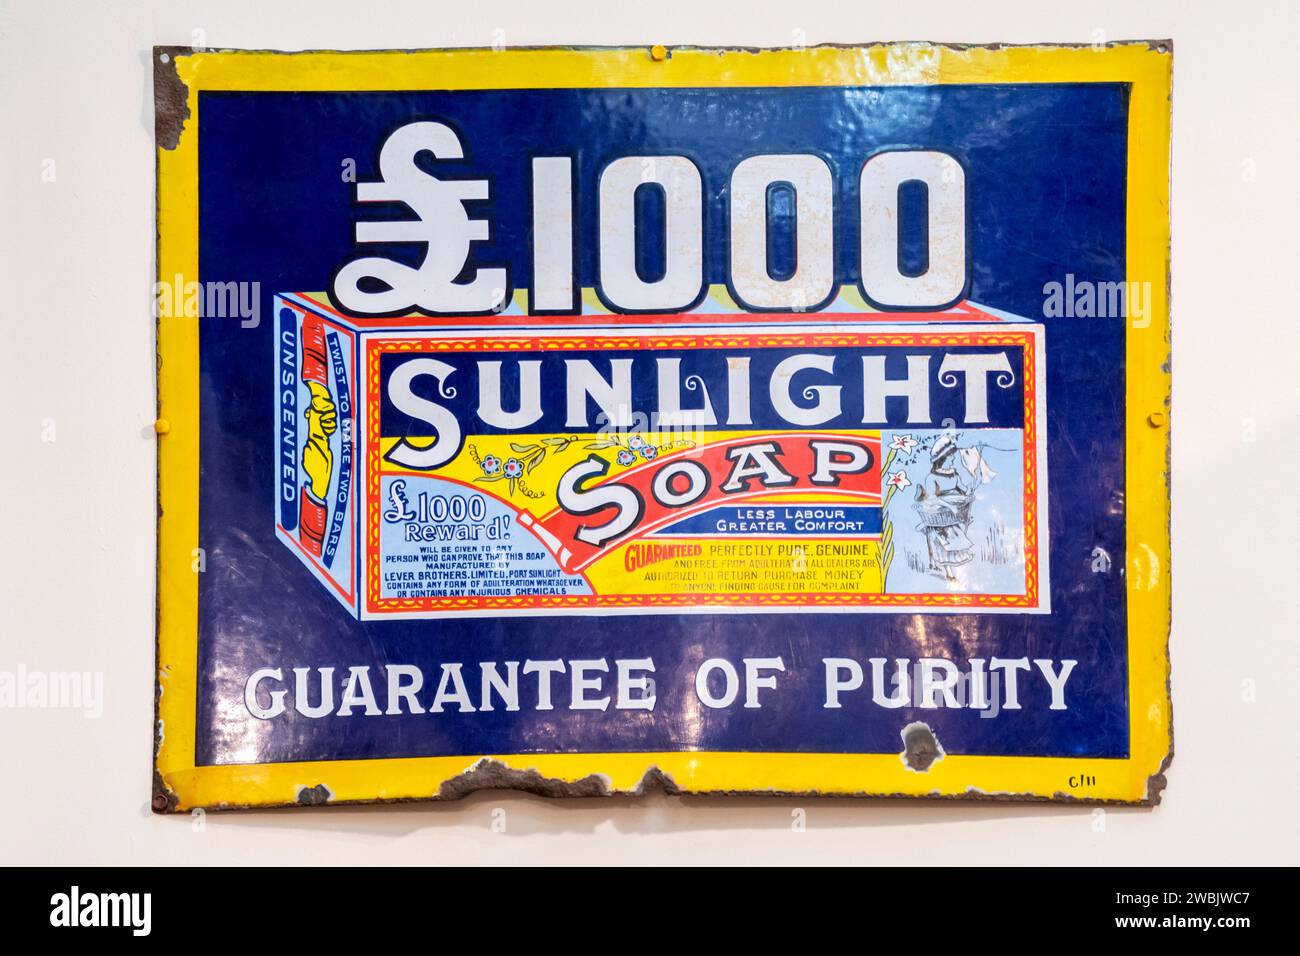 An old enamel metal sign advertising Sunlight Soap. Stock Photo